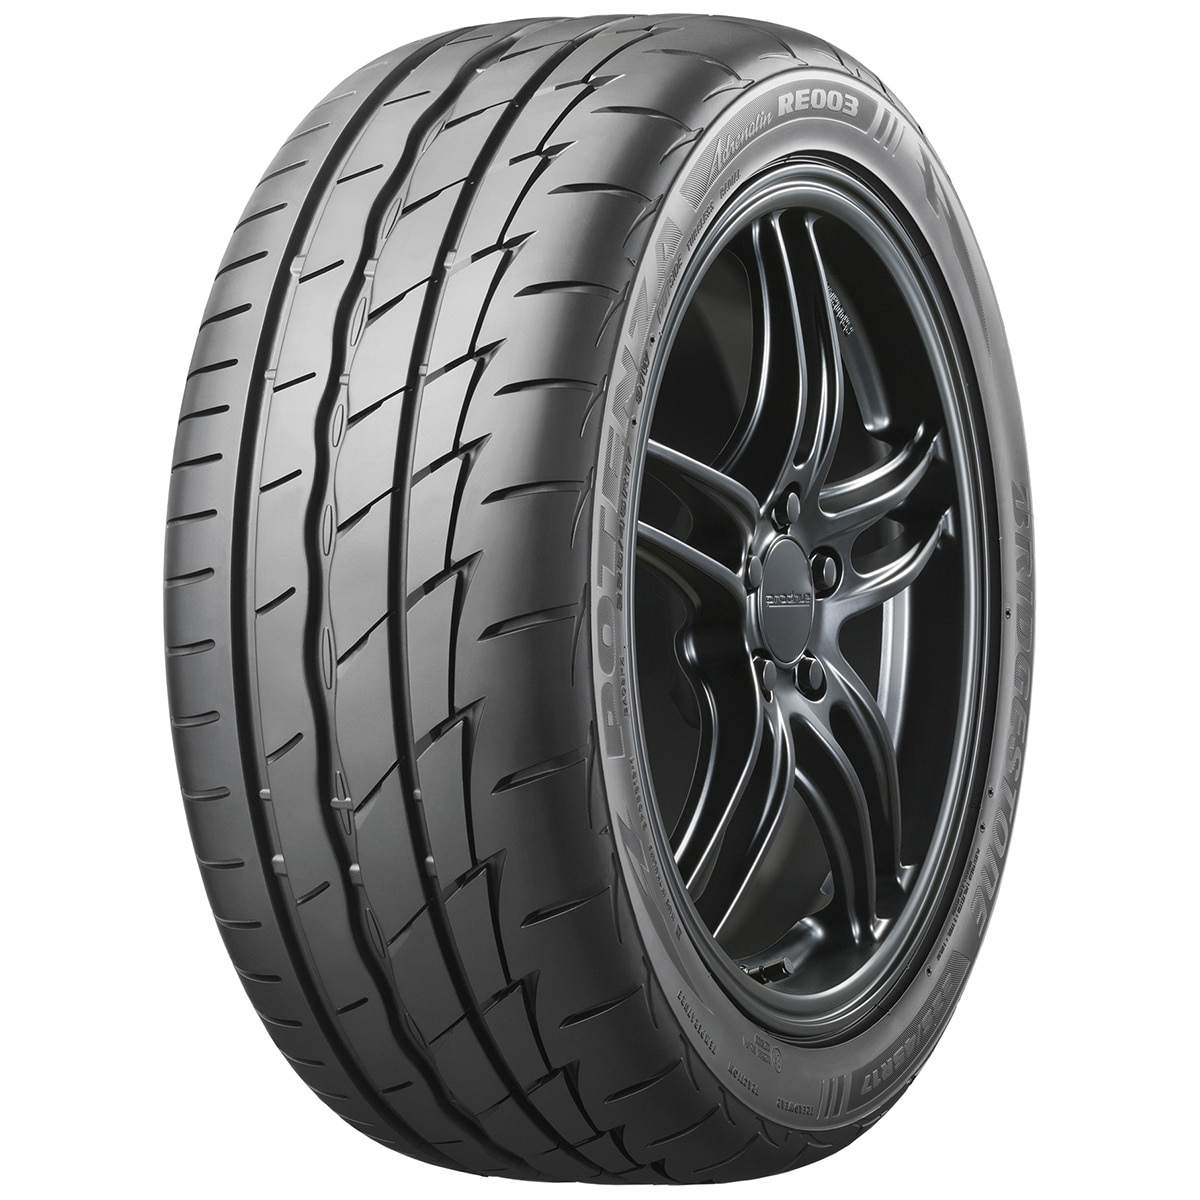 245/40R18 97W XL BS RE003 - Tyre